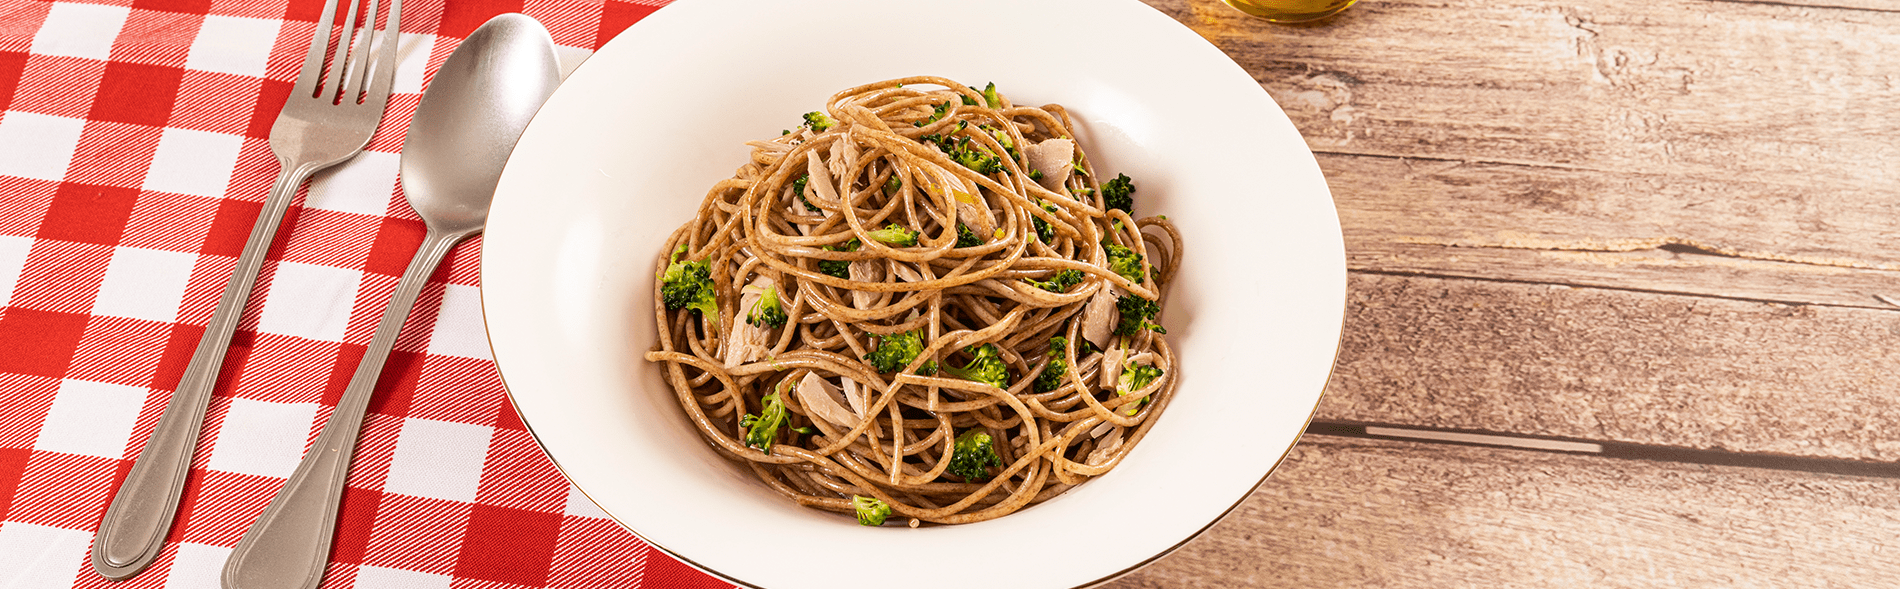 Spaghetti 5 Integral con atún y brócoli | Carozzi me encanta